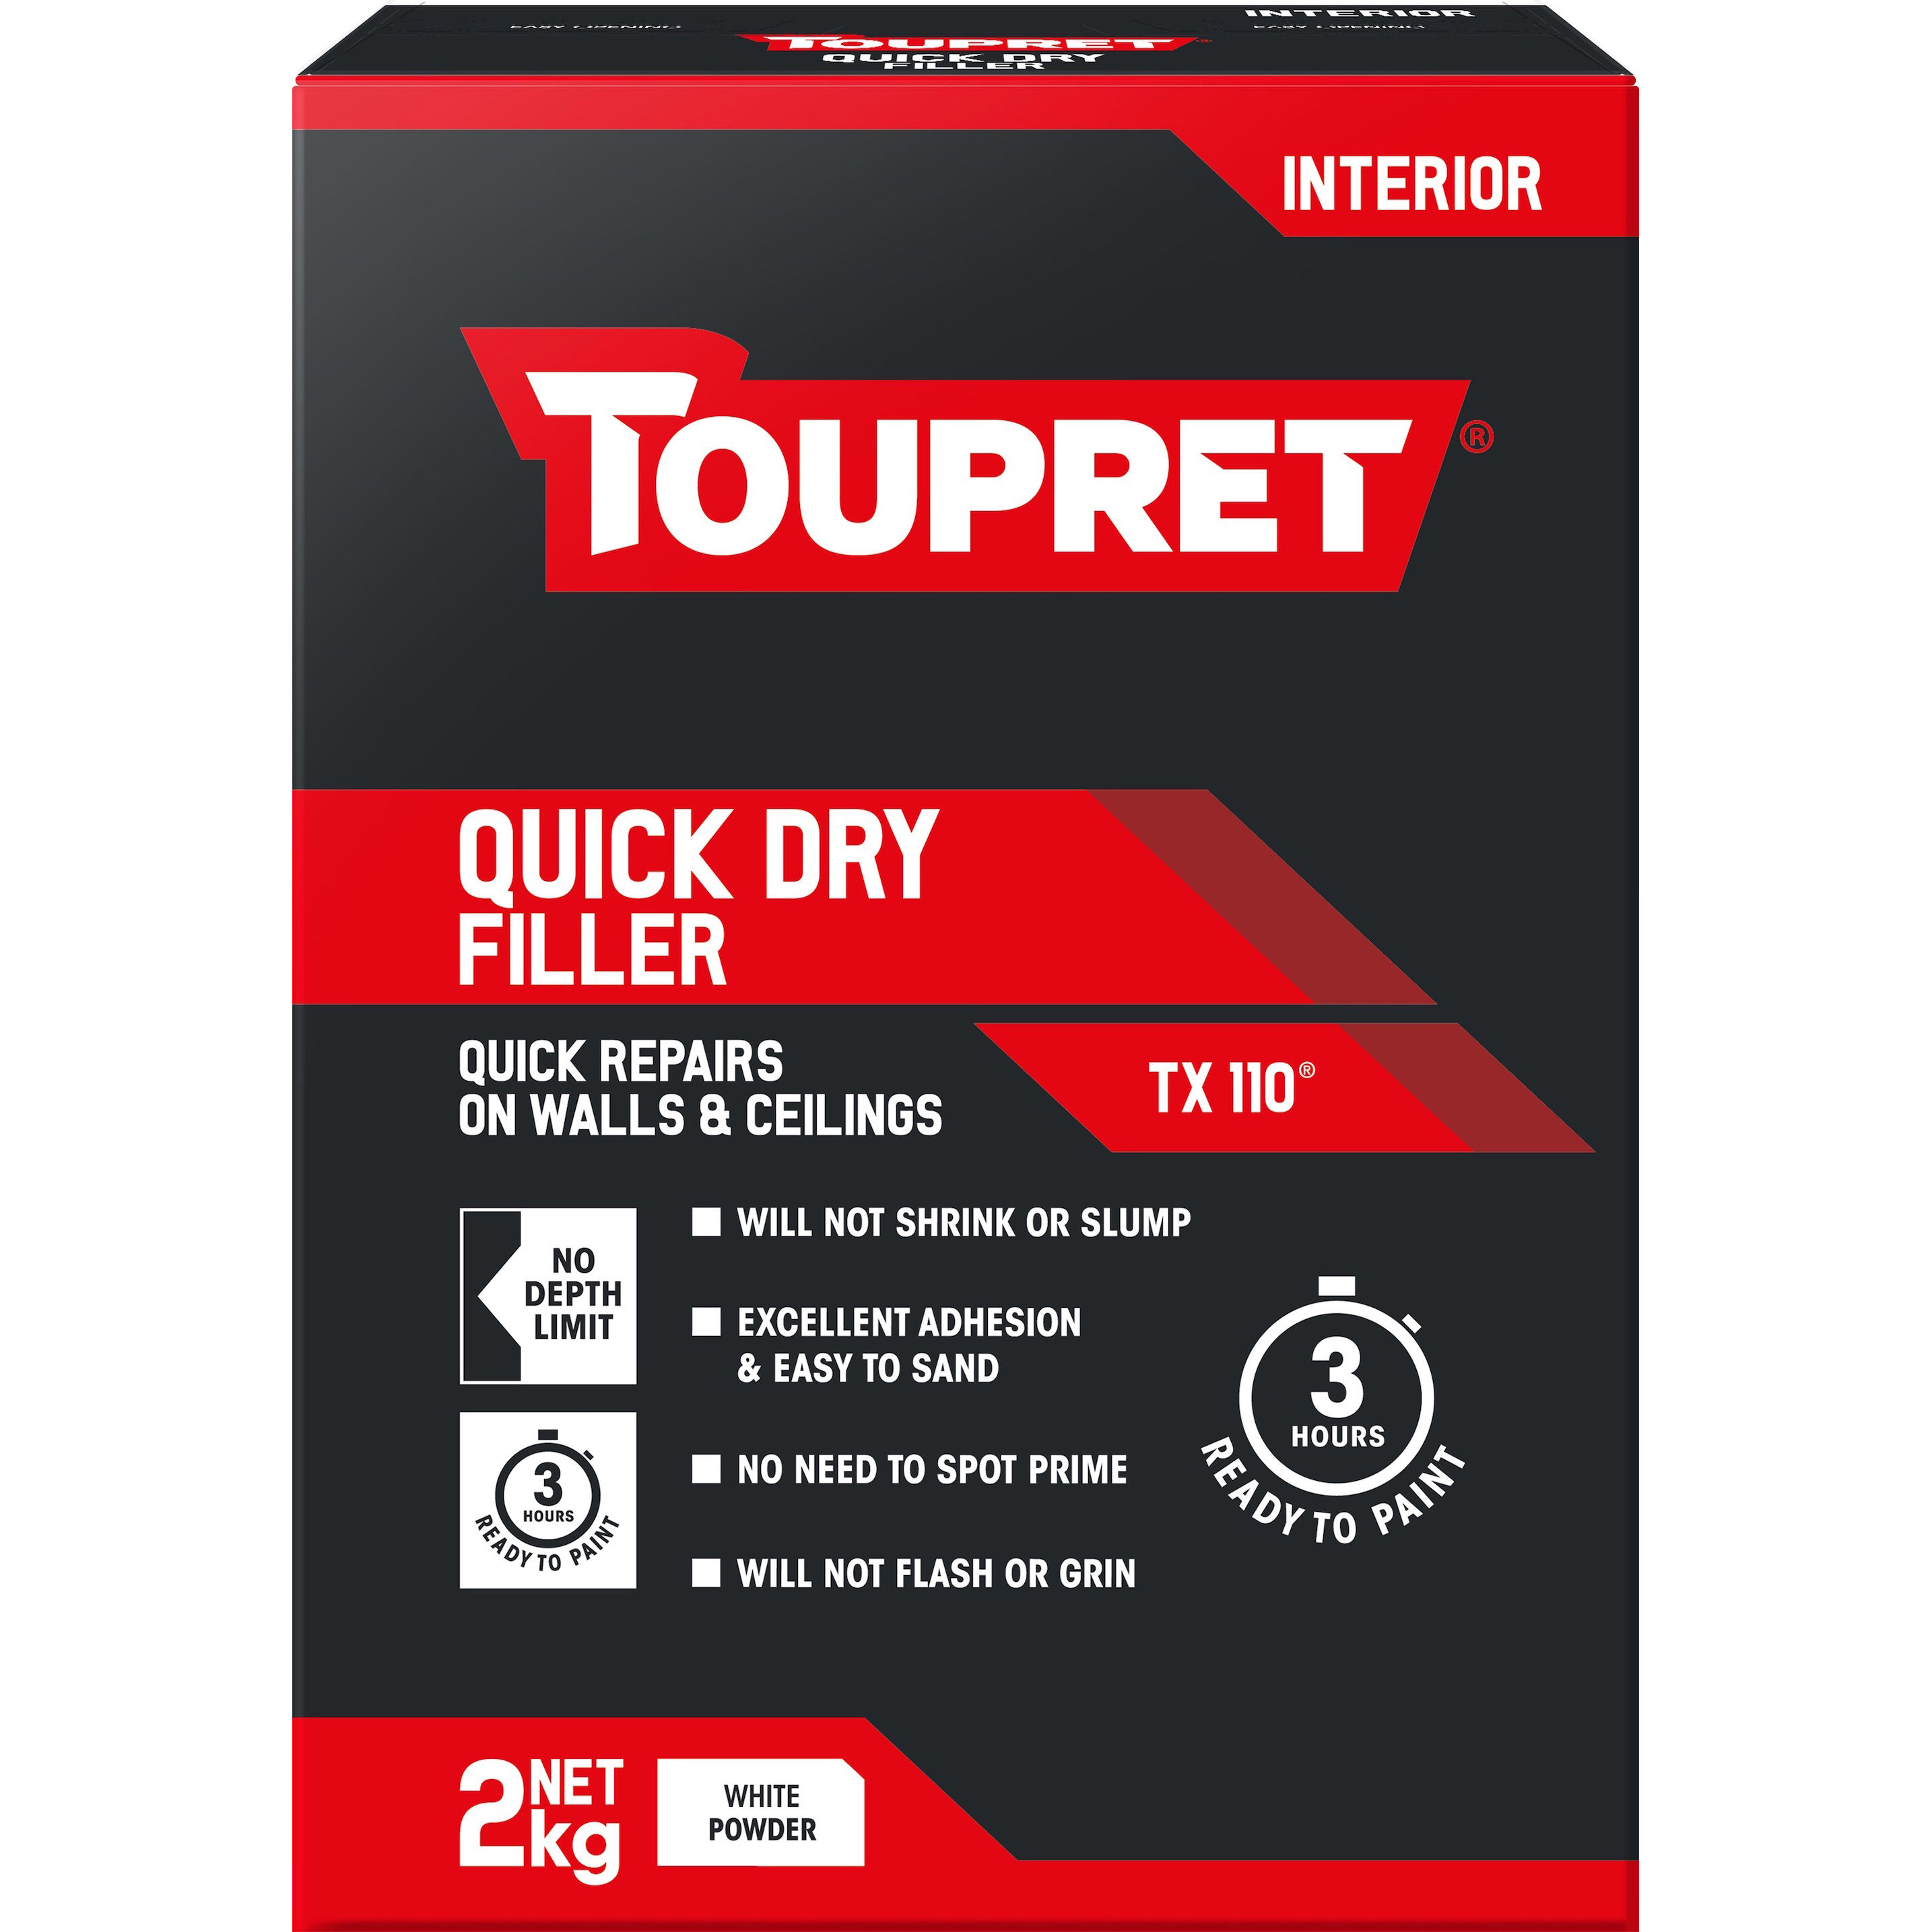 Toupret Quick Dry Filler - Tx 110